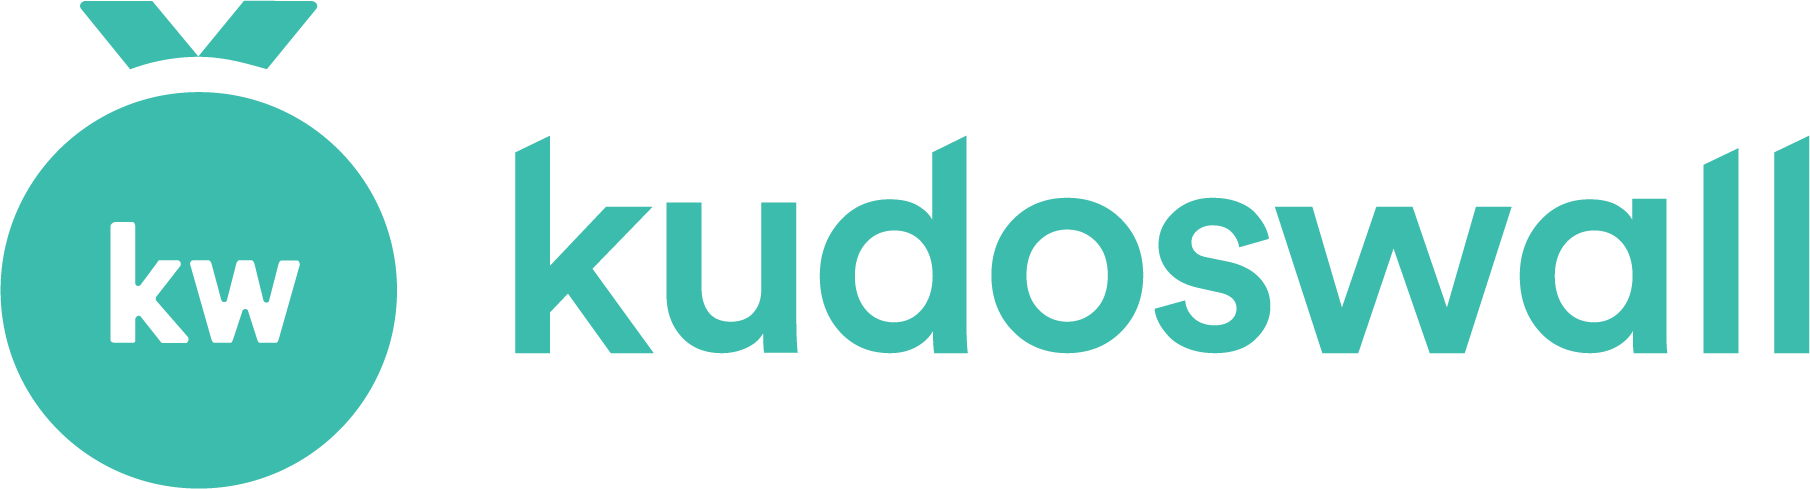 KudosWall Pro Logo